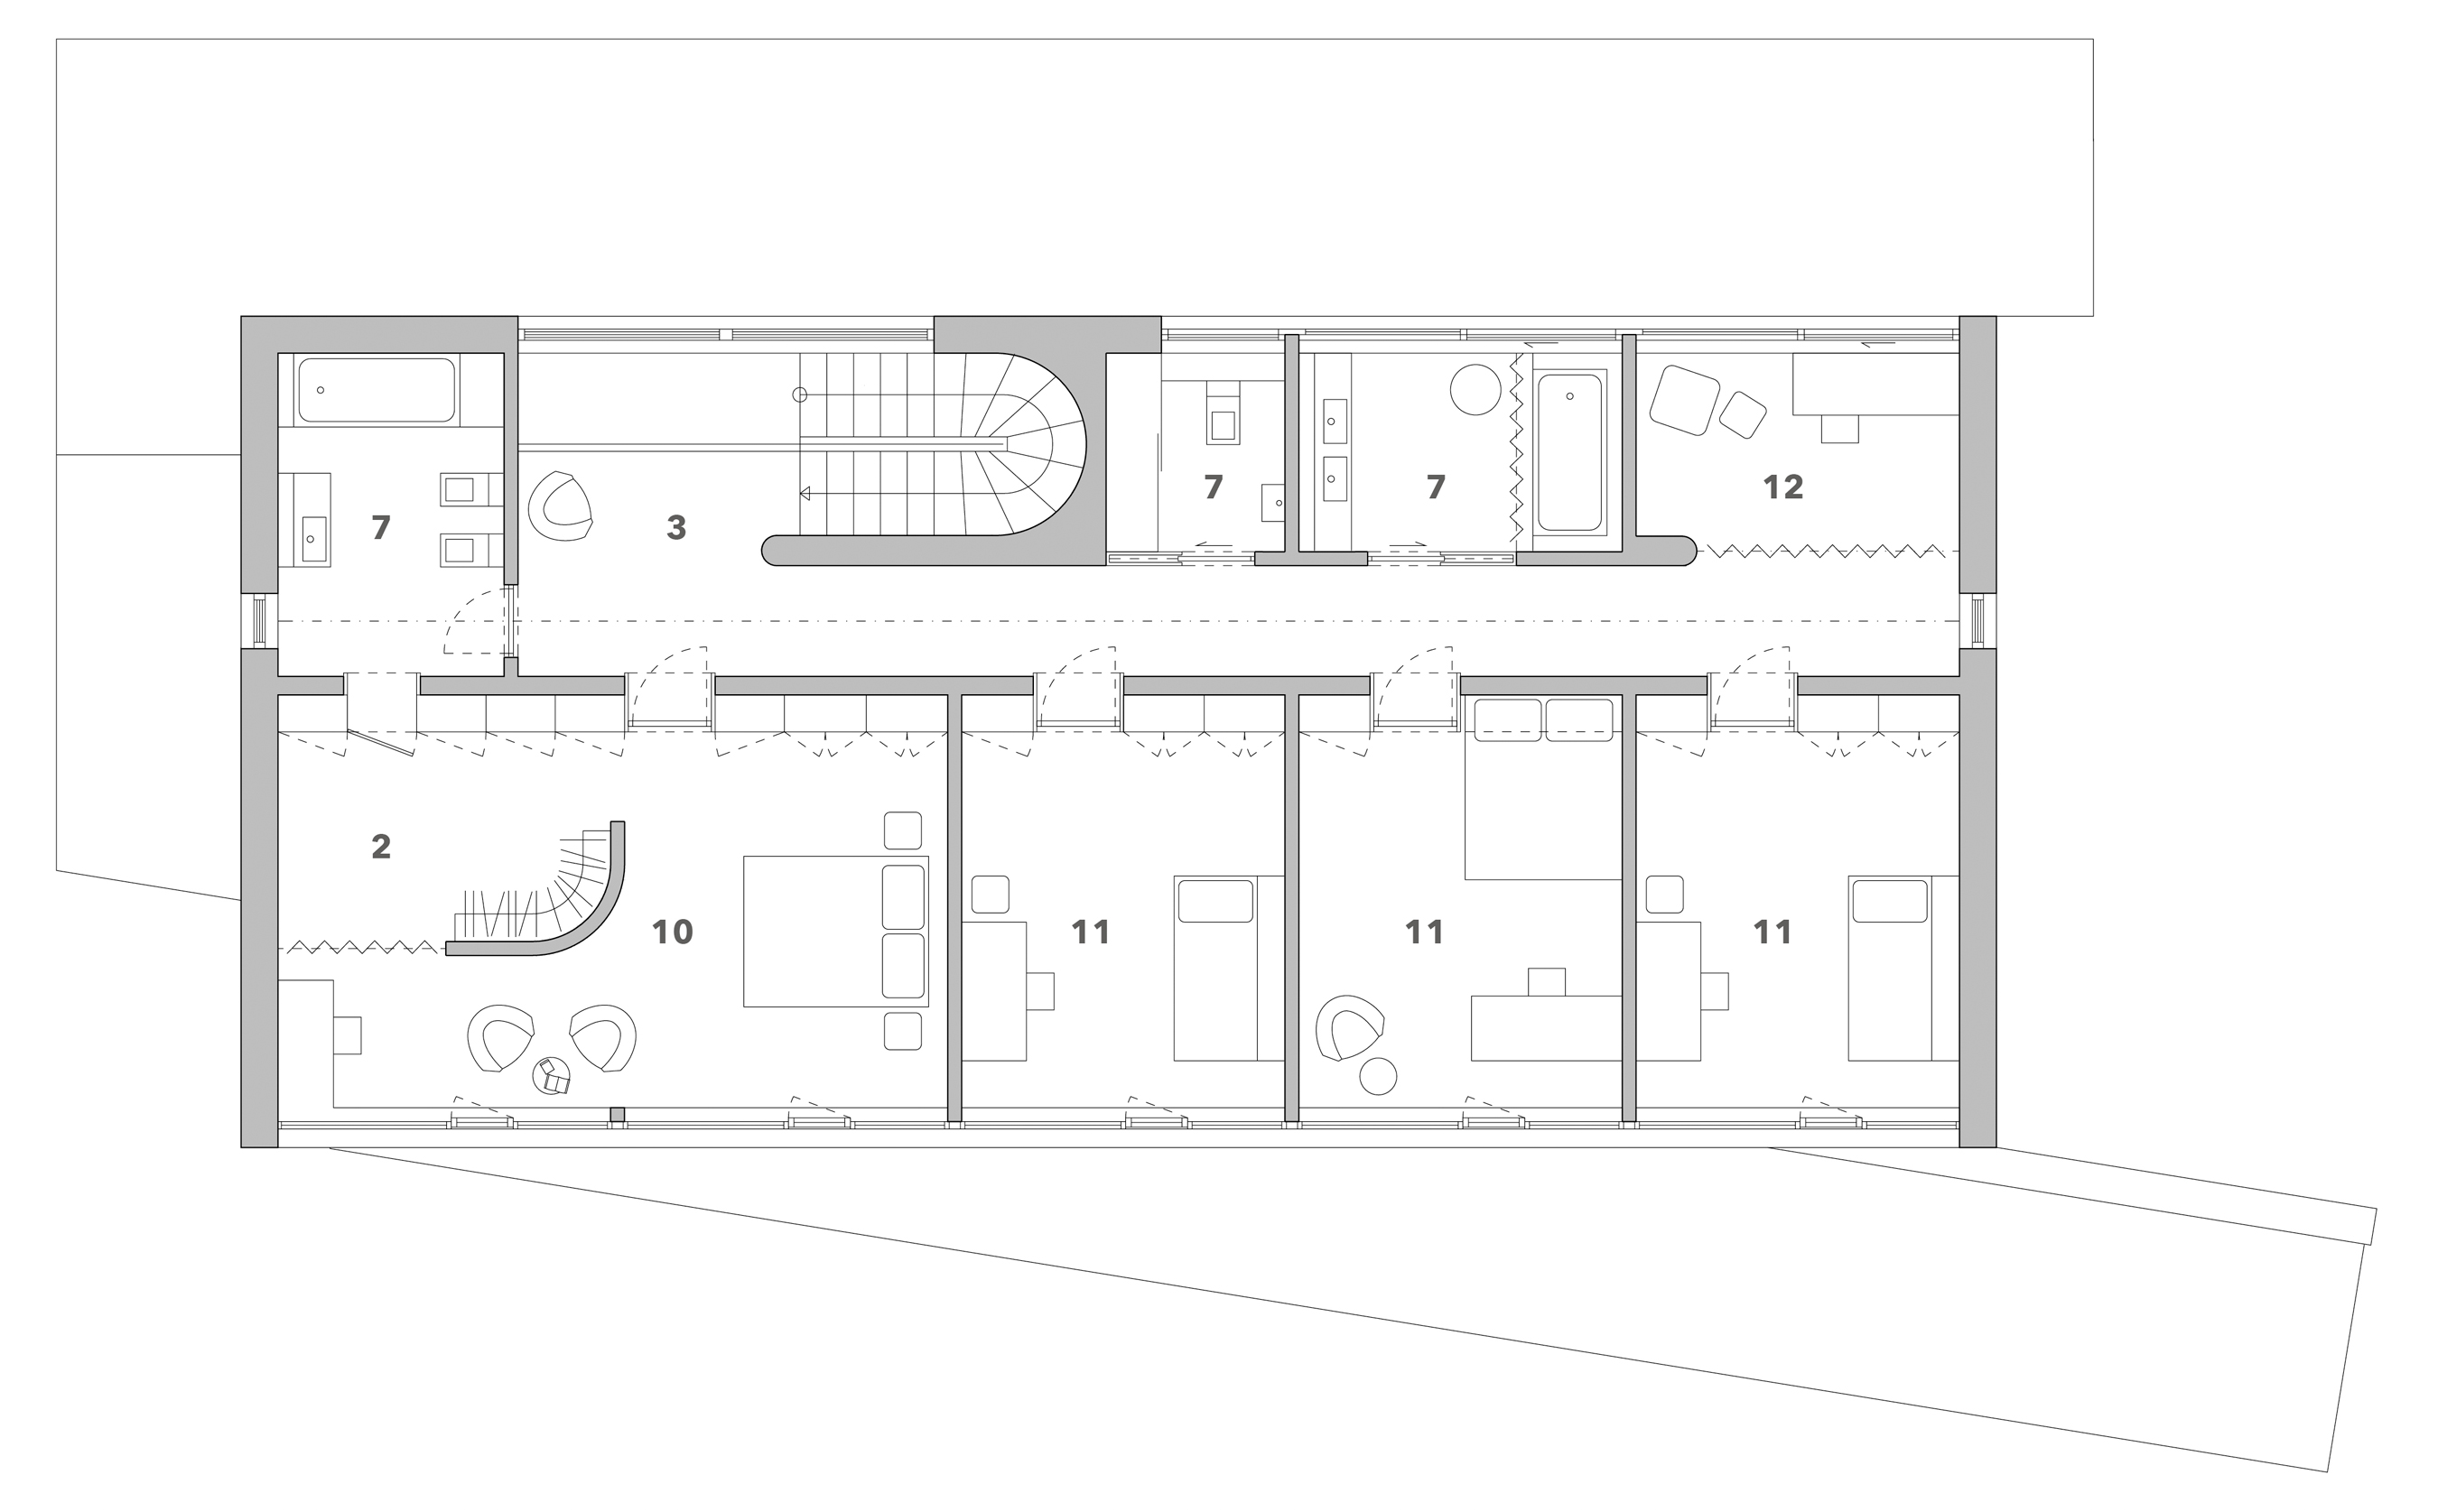 Second floor:  - 2 - Cloak room, 3 - Hallway with stairs,  7 - WC/Bathroom,  10 - master bedroom, 11 - bedroom, 12 - household workshop